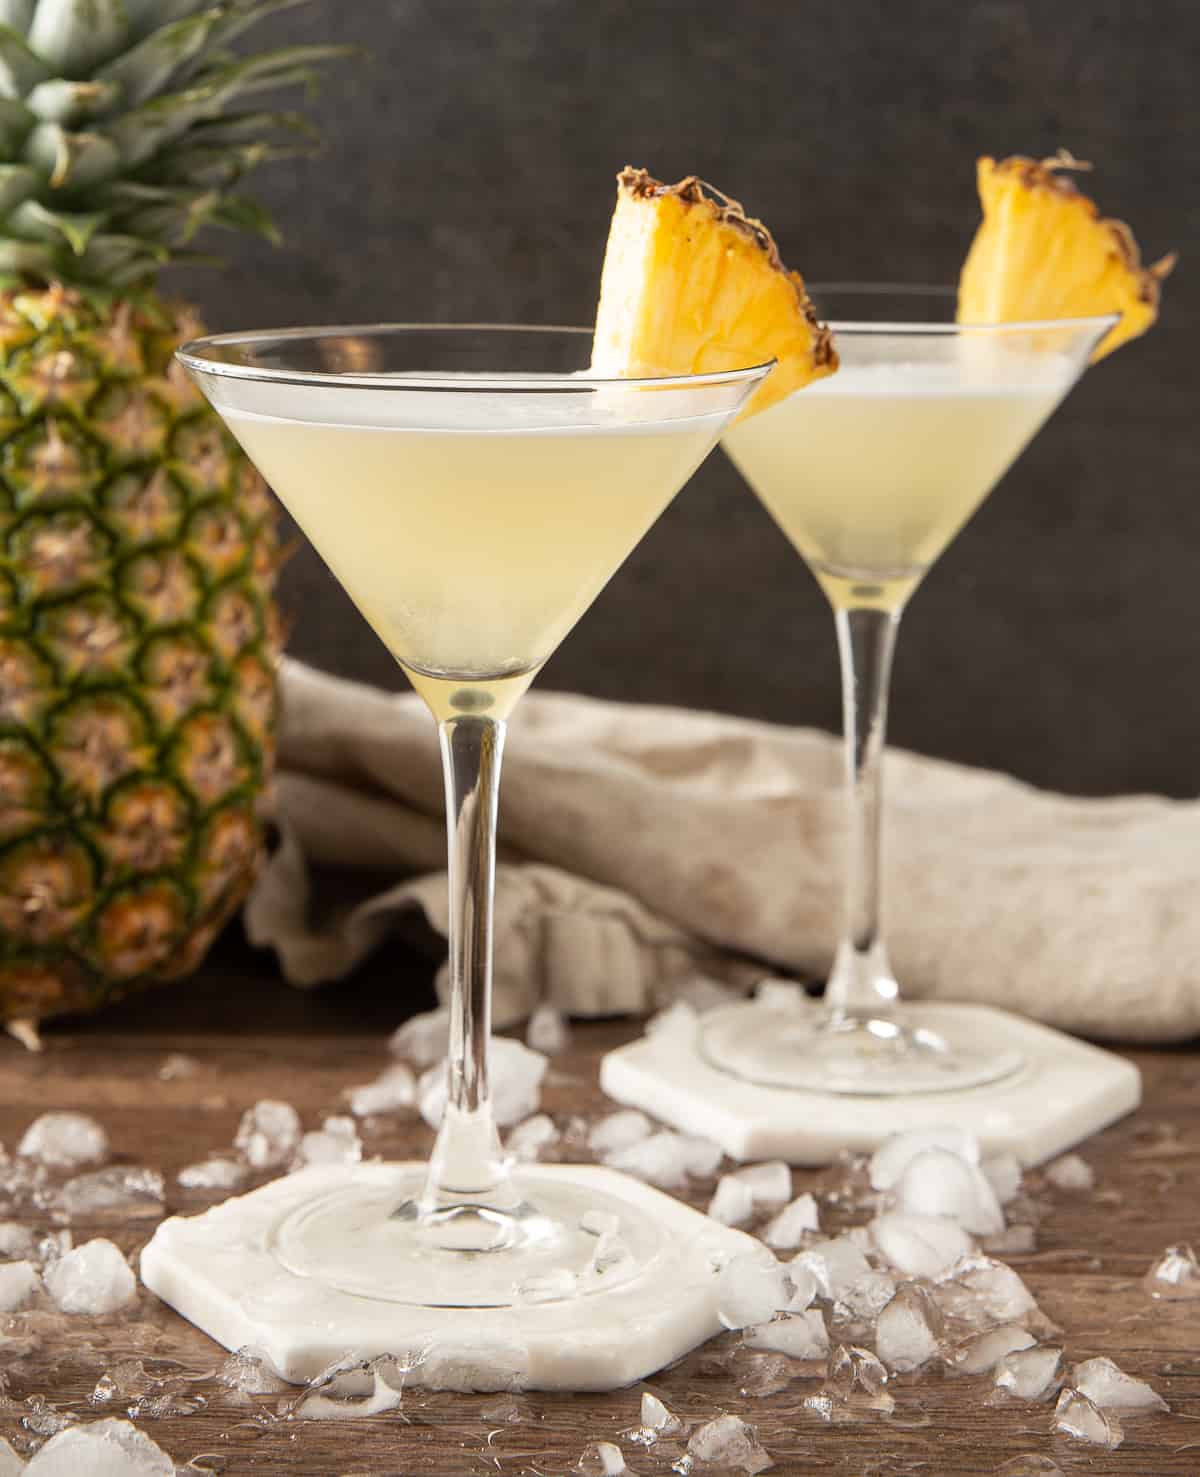 https://basilandbubbly.com/wp-content/uploads/2021/09/pineapple-infused-vodka-2.jpg